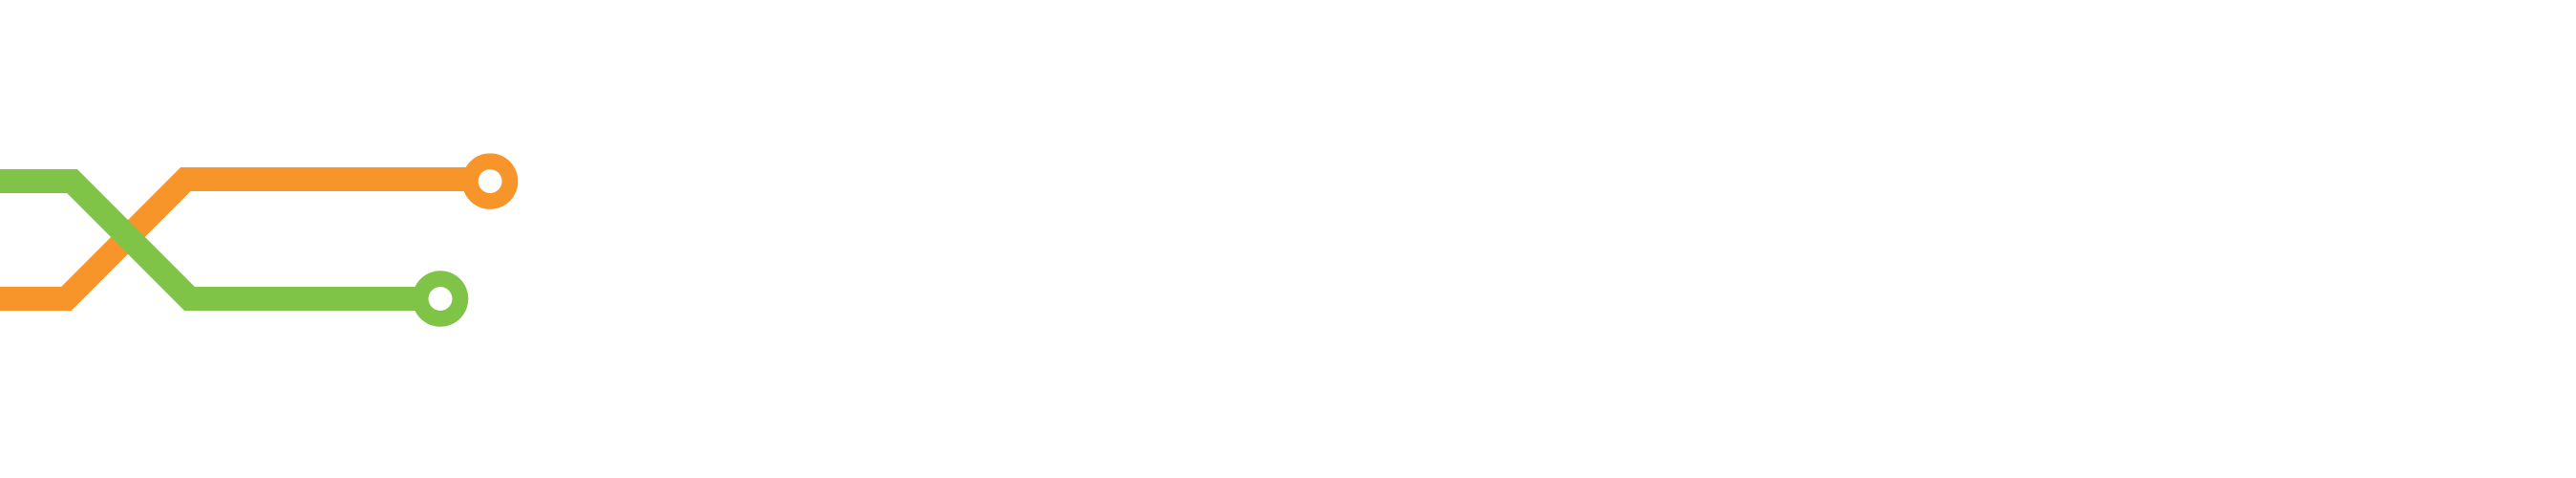 Cross River Logo - Home | Cross River Rail